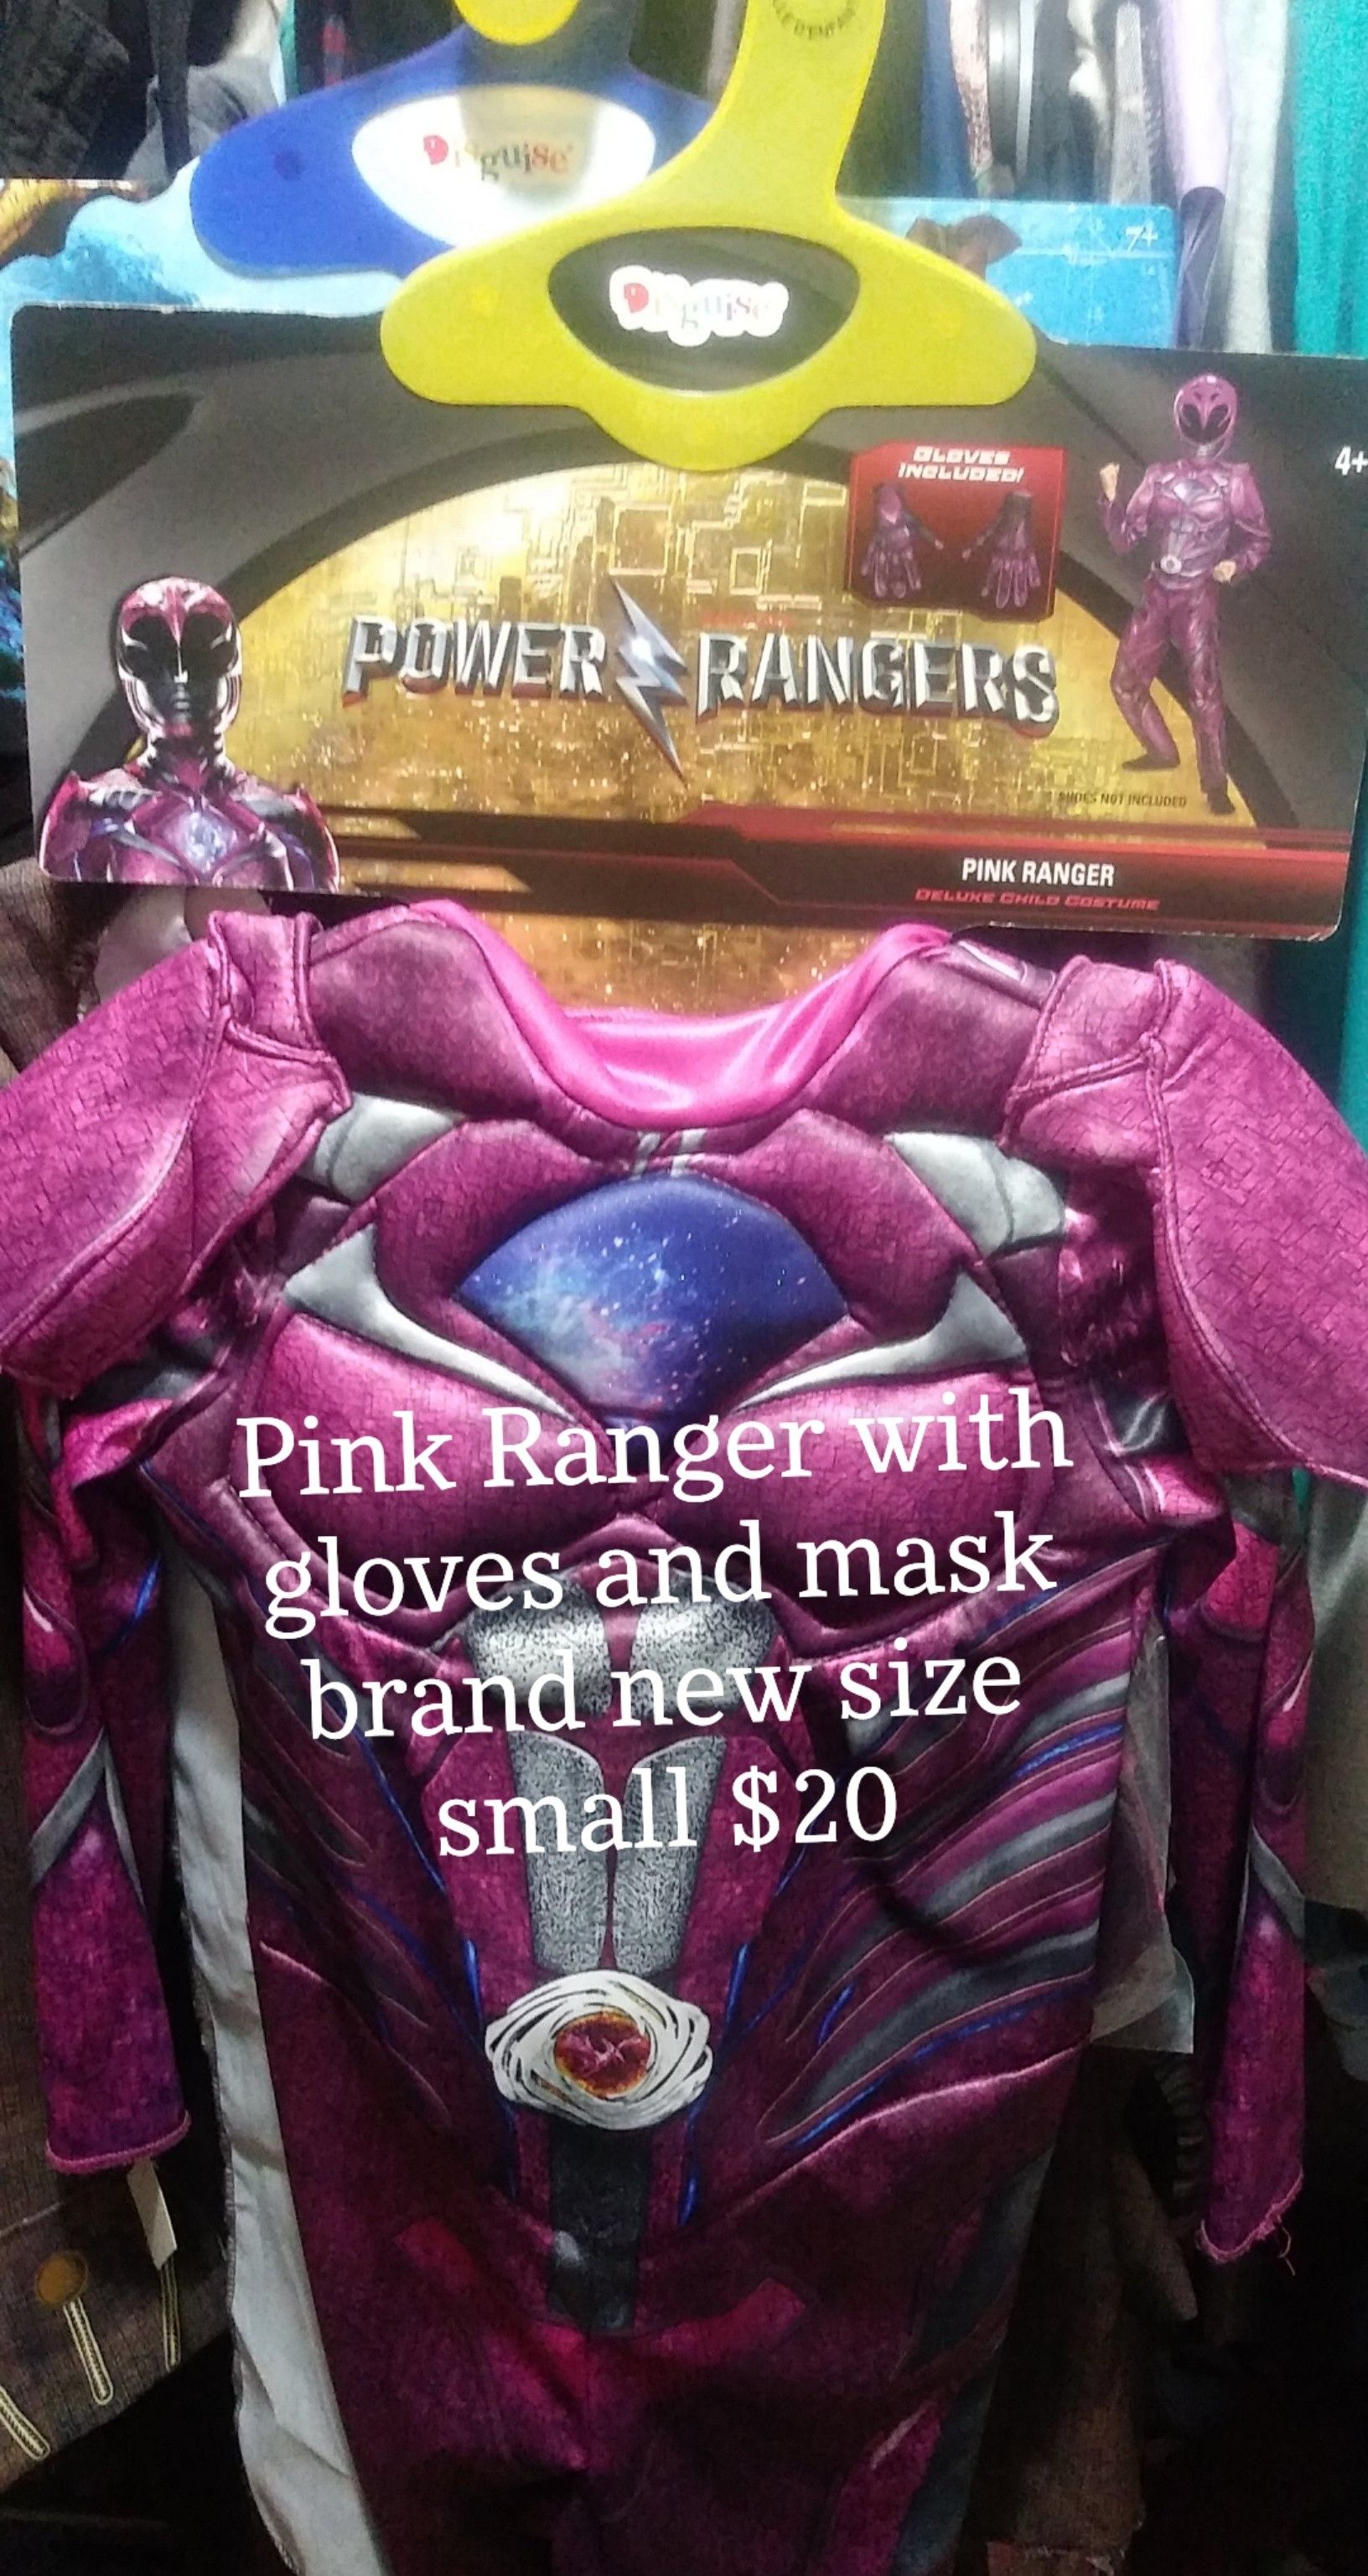 Pink ranger costume